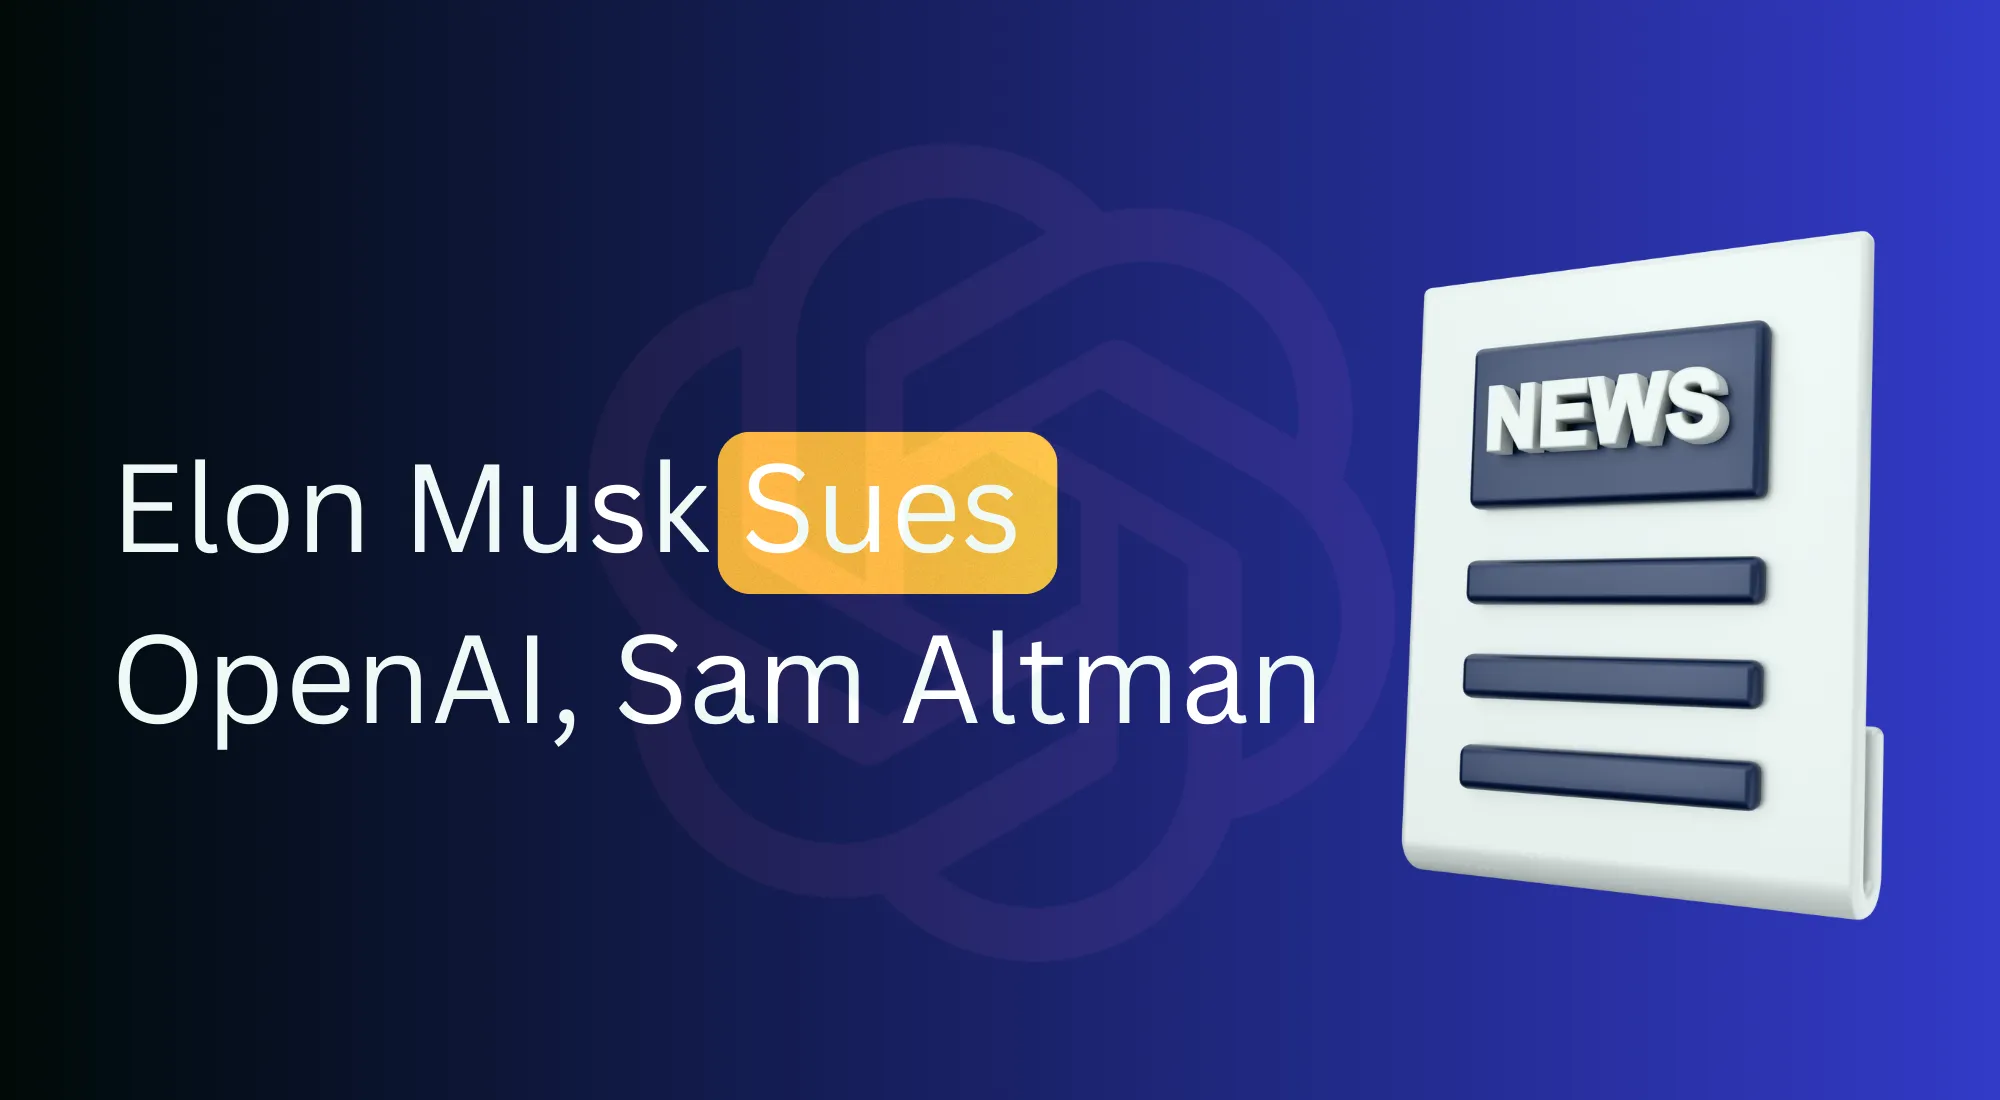 Why Elon Musk Sue OpenAI & Sam Altman?